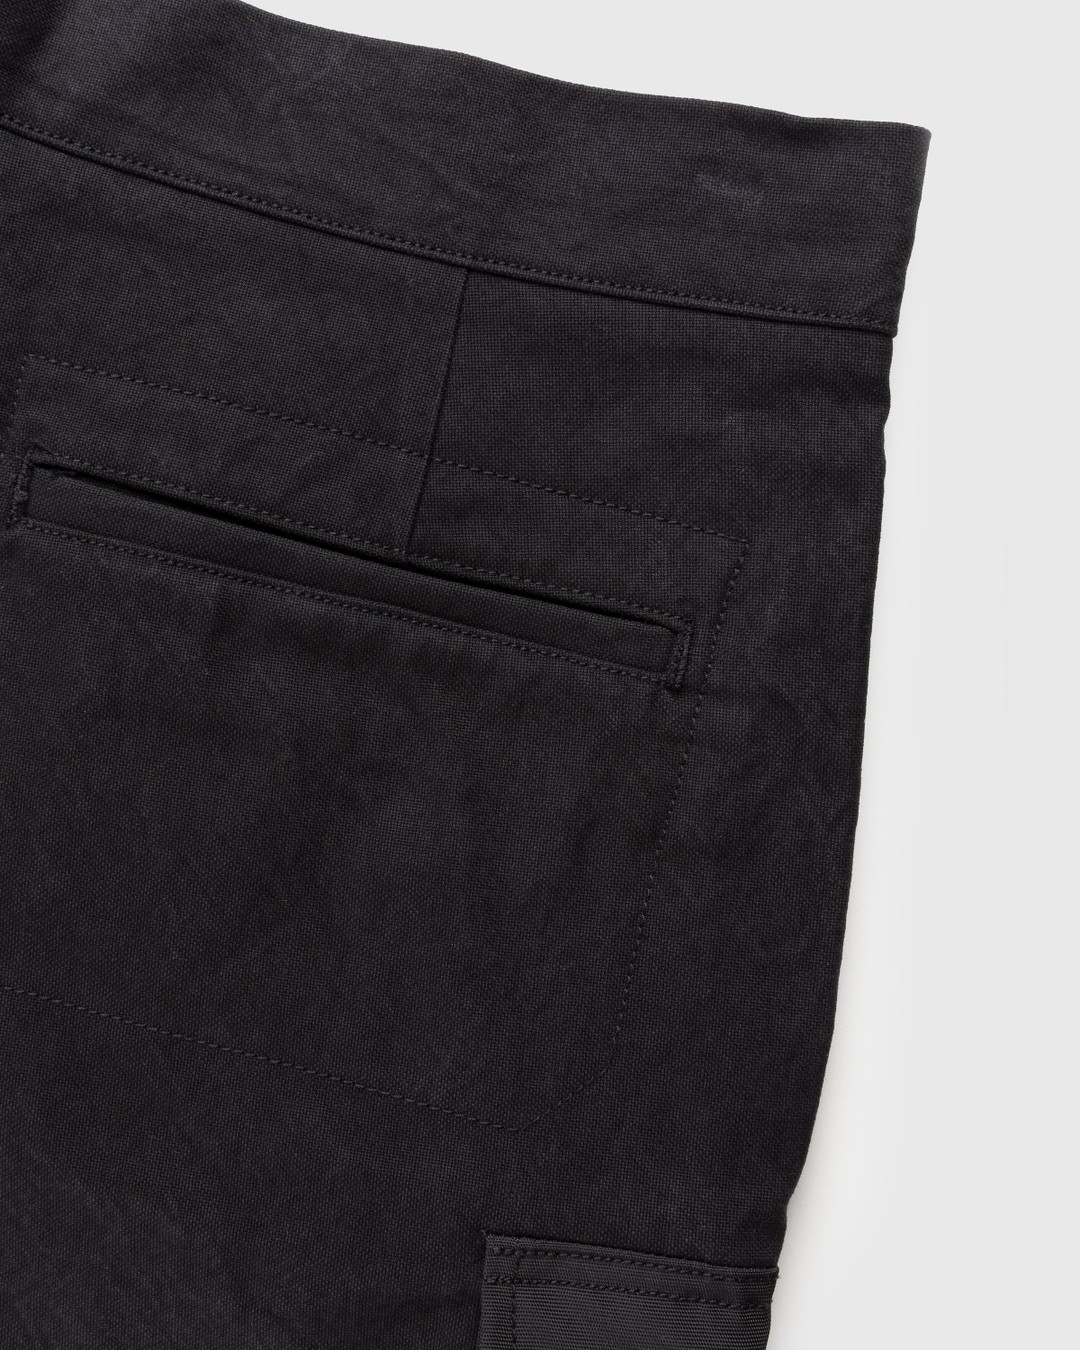 Phipps – Action Shorts Ranger Cotton Black - Shorts - Black - Image 5